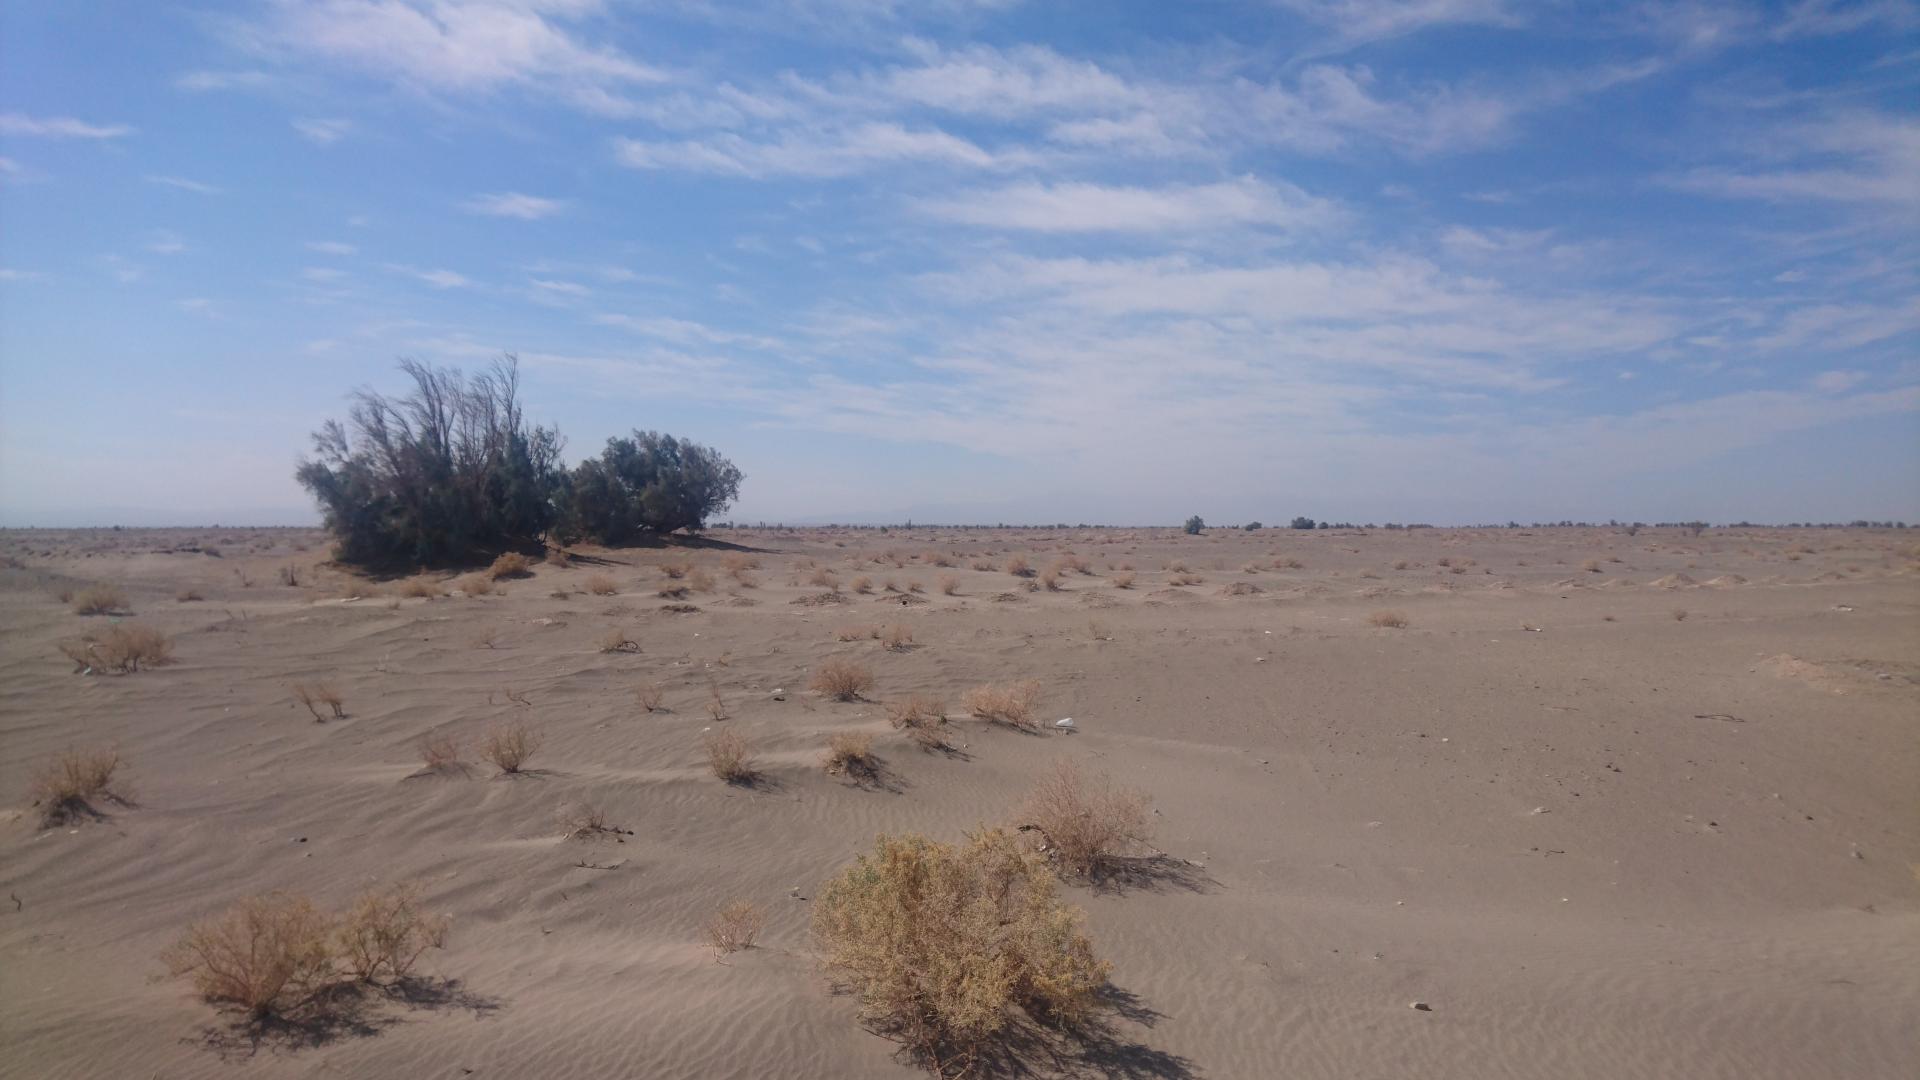 Sand overtaking grassland vegetation